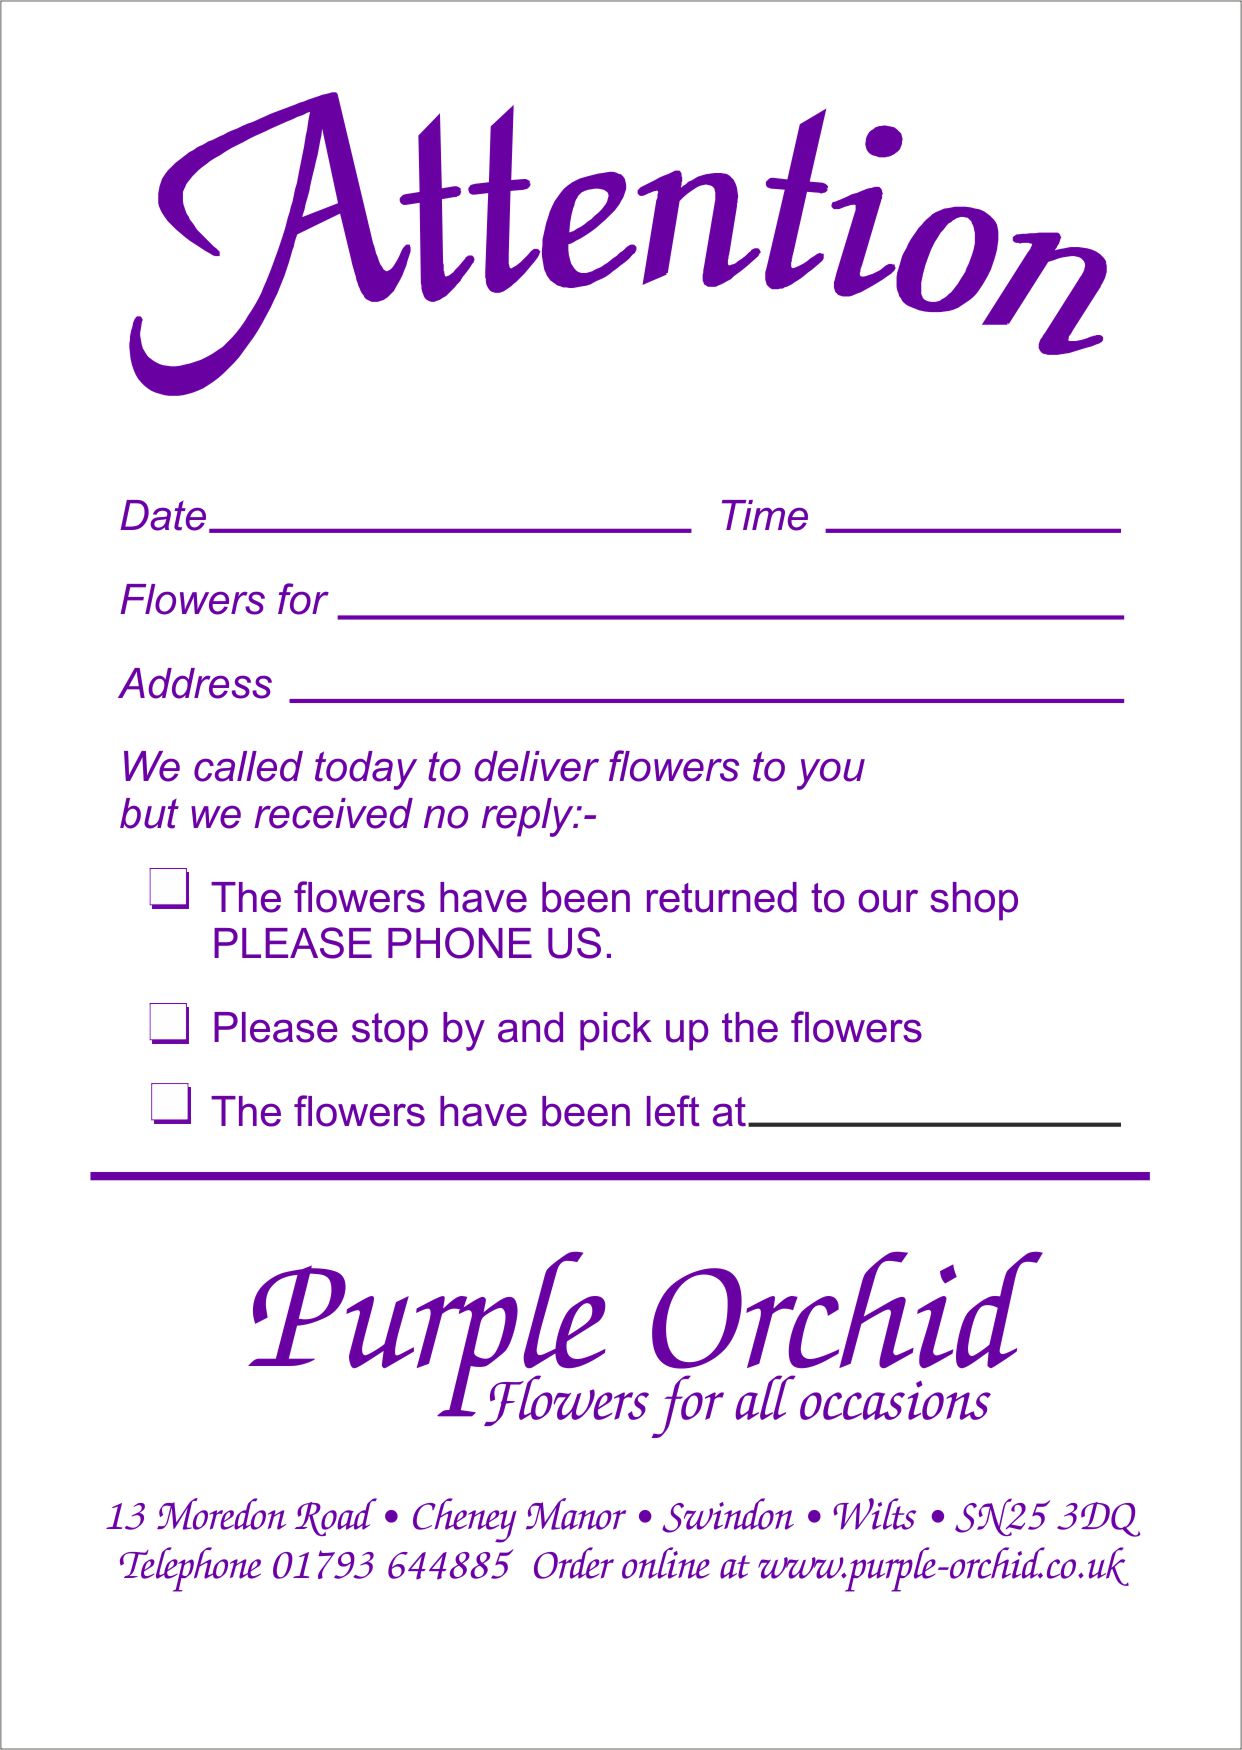 PurpleOrchid.jpg